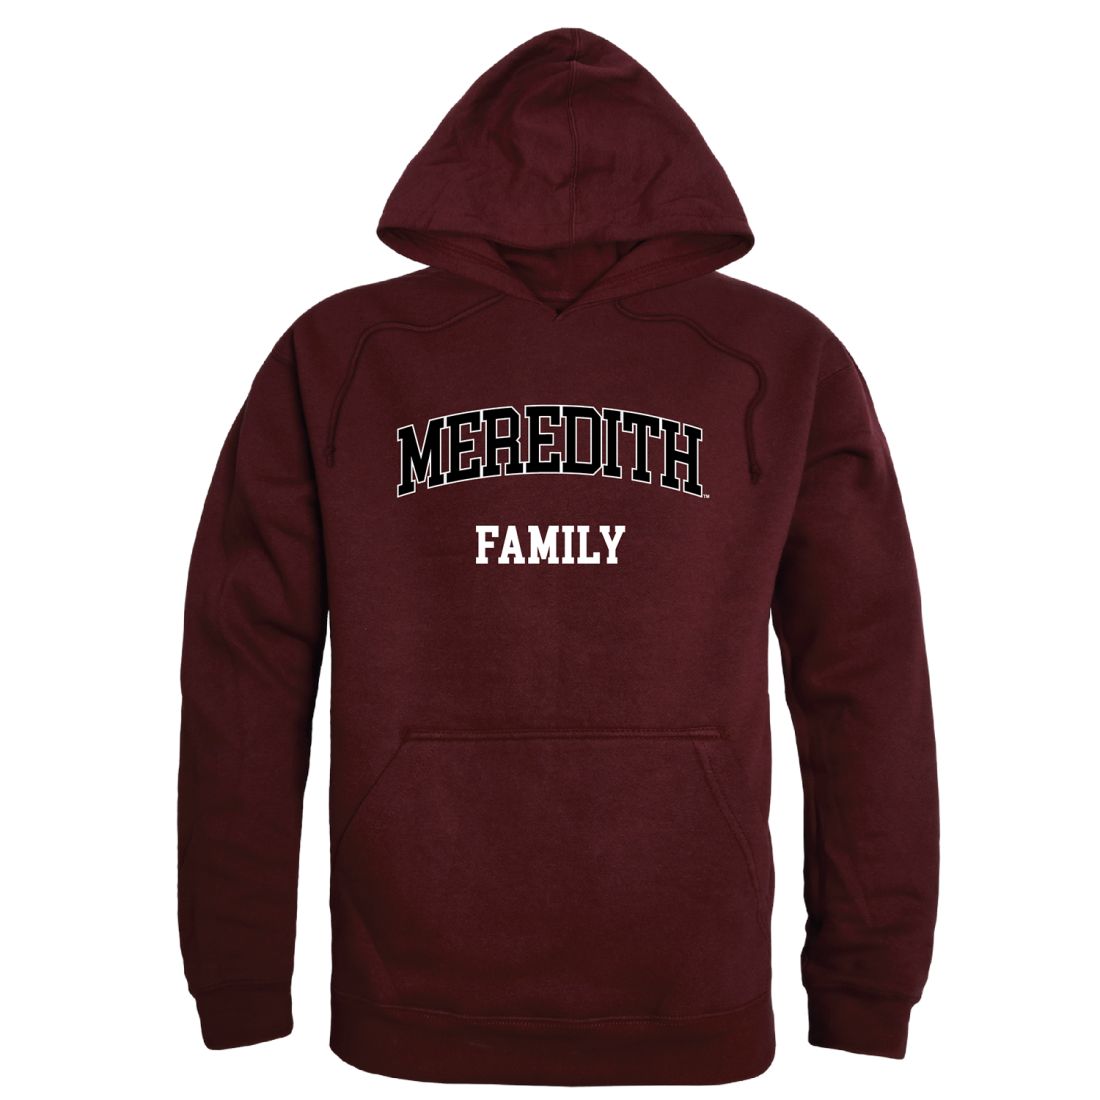 Meredith College Avenging Angels Family Hoodie Sweatshirts